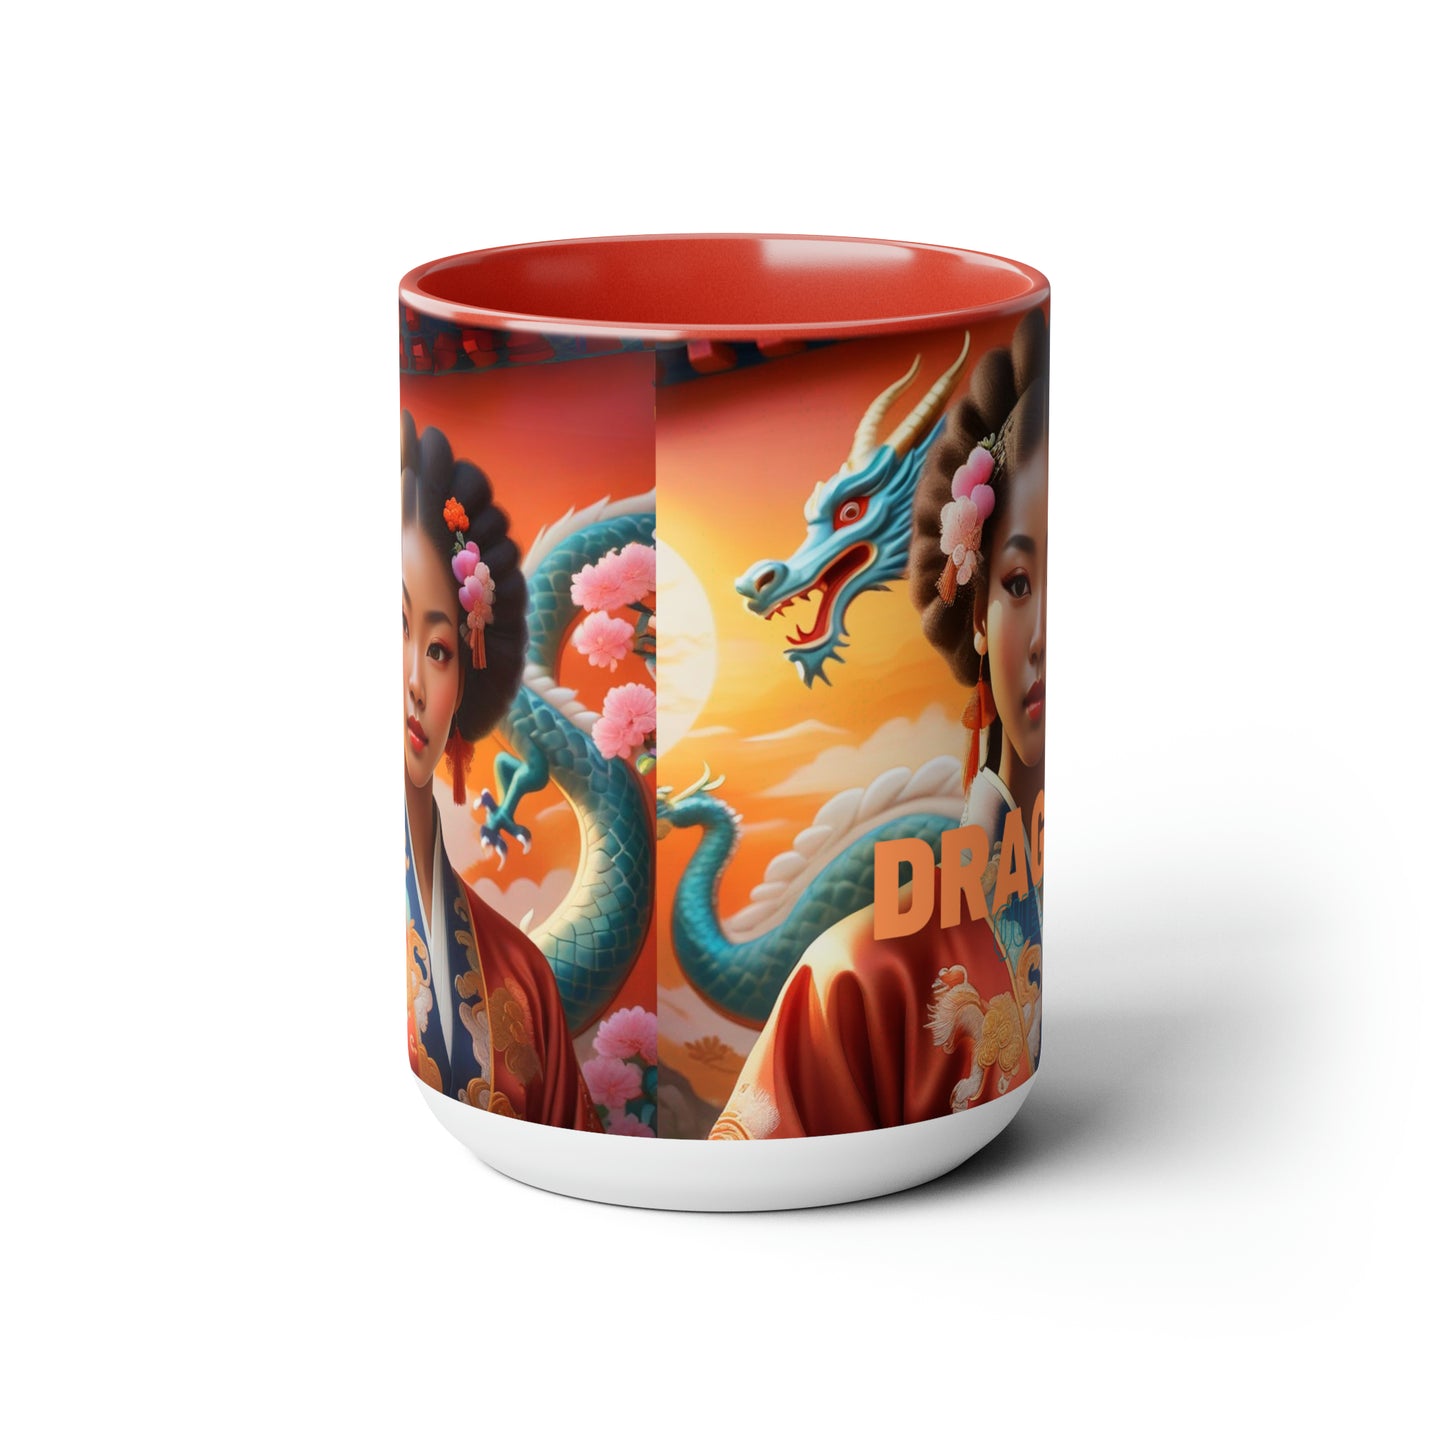 Two-Tone Dragon Queen Coffee Mugs, 15oz